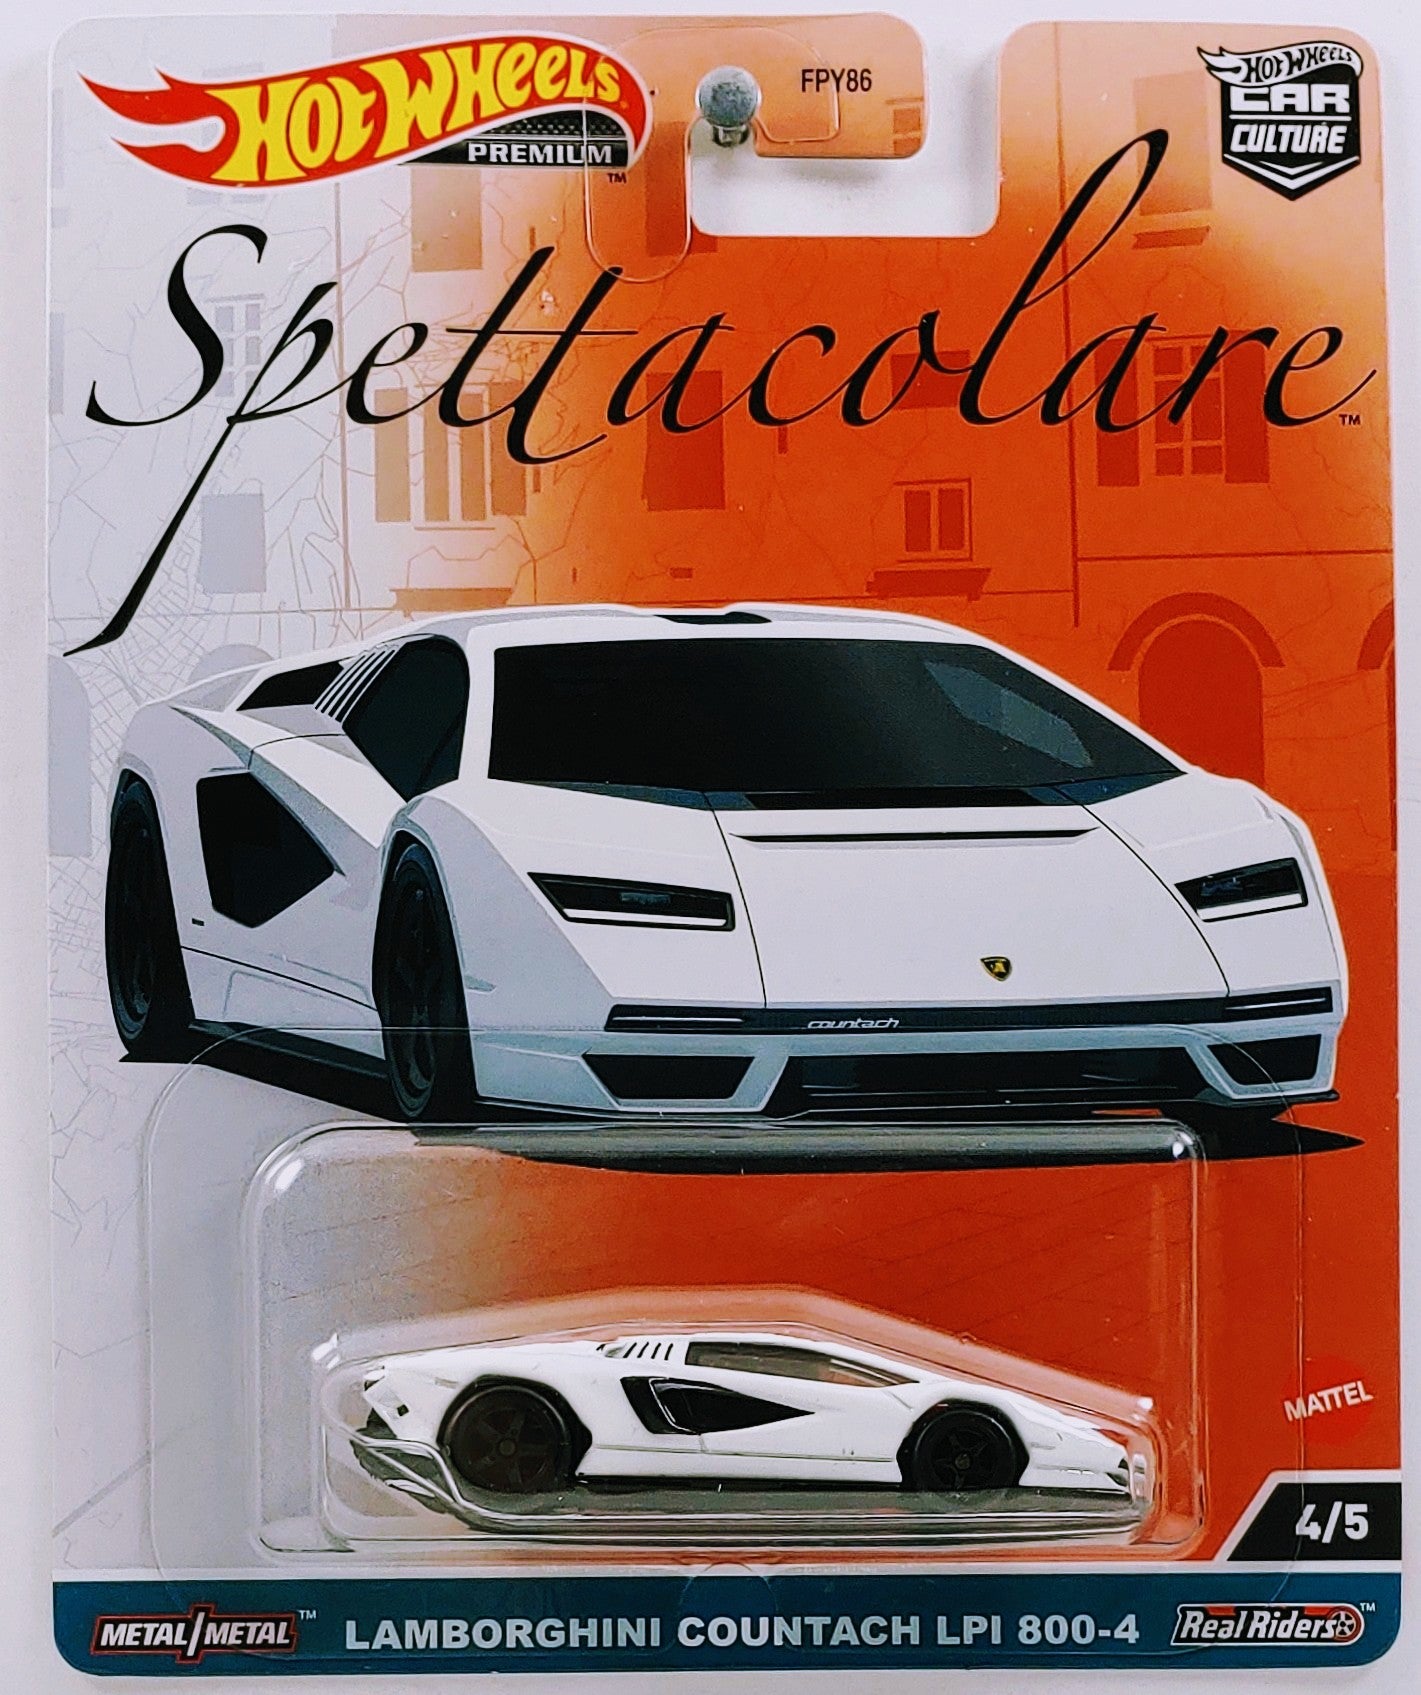 Hot Wheels 2023 - Premium / Car Culture / Spettecolare 4/5 - Lamborghini Countach LPI 800-4 - White / Black Accents - Metal/Metal & Real Riders